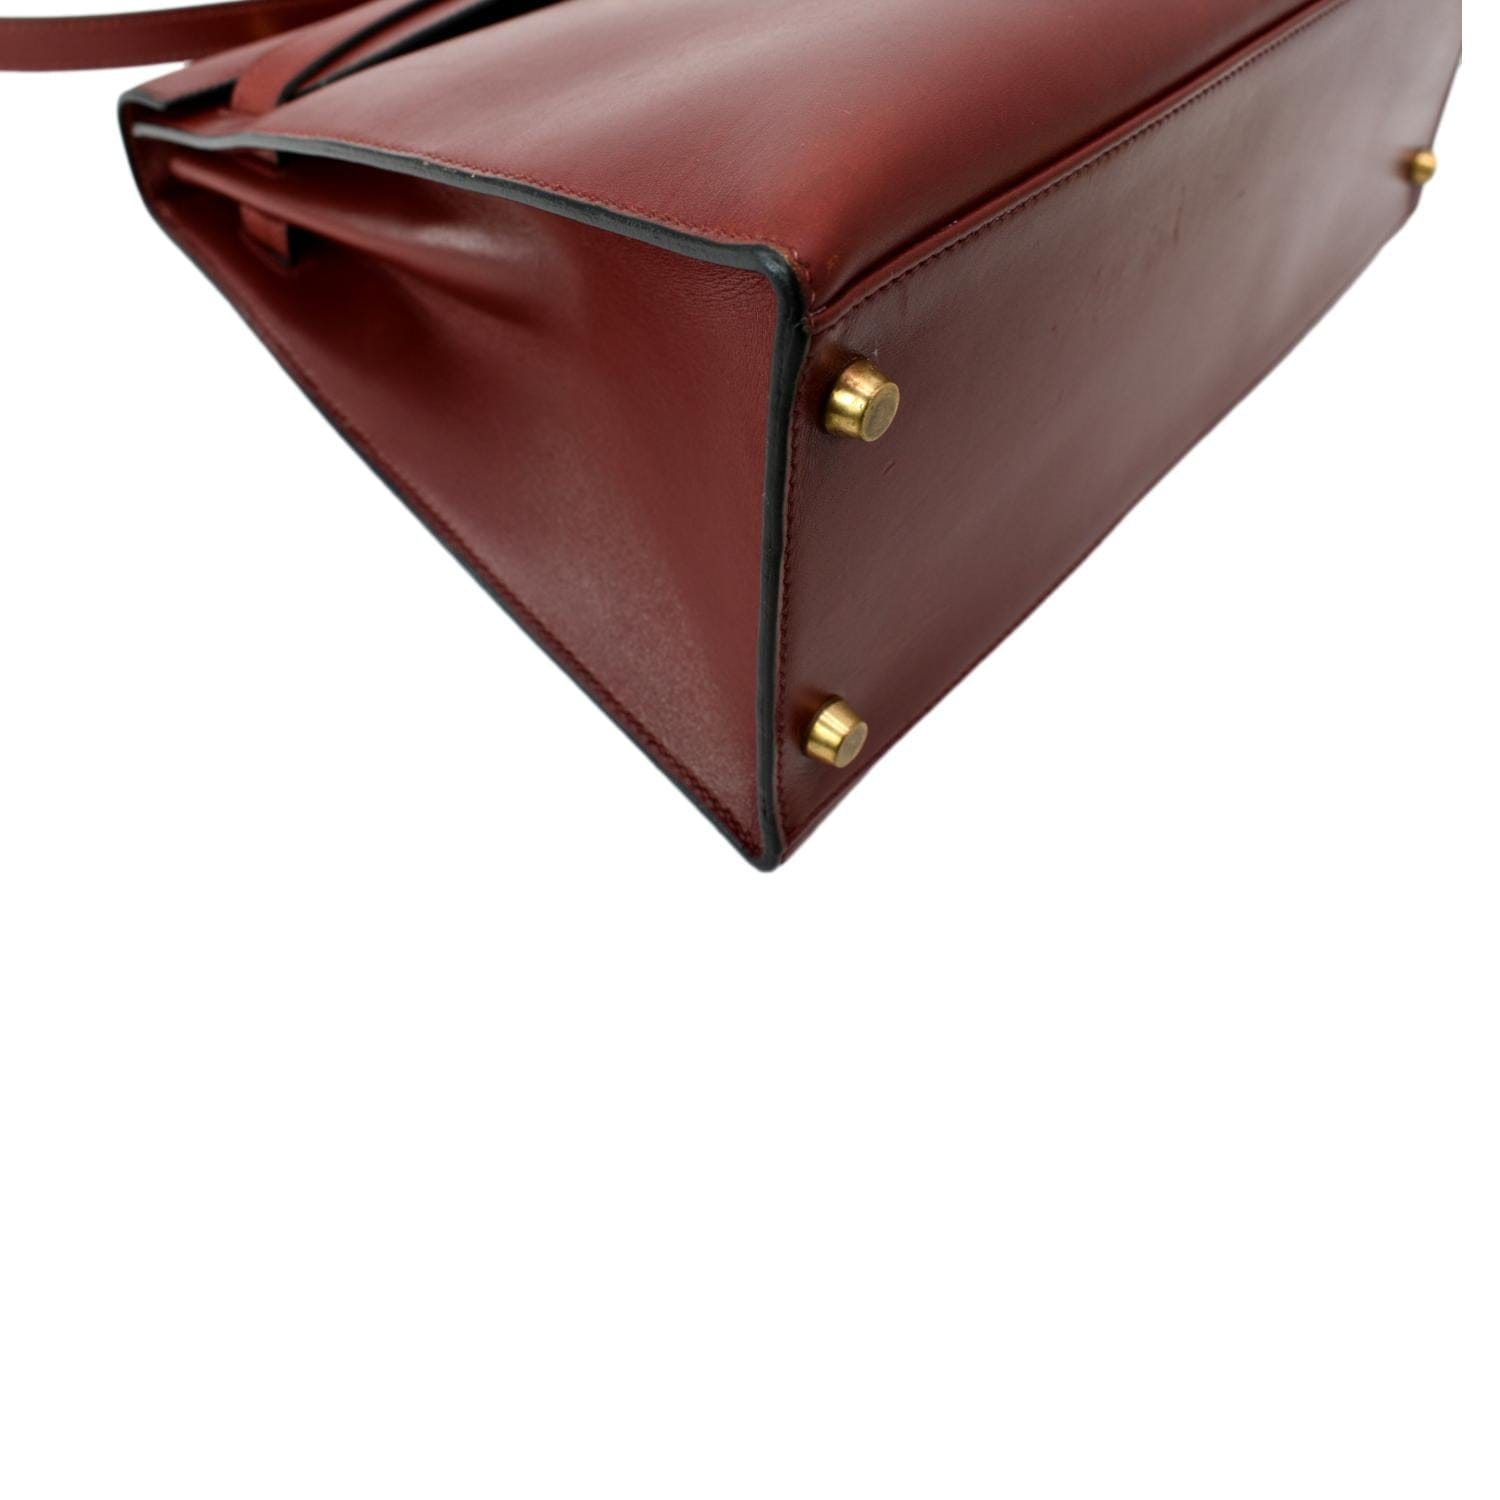 Hermès Kelly 32 sellier handbag strap in rouge brique box calfskin leather,  SHW at 1stDibs